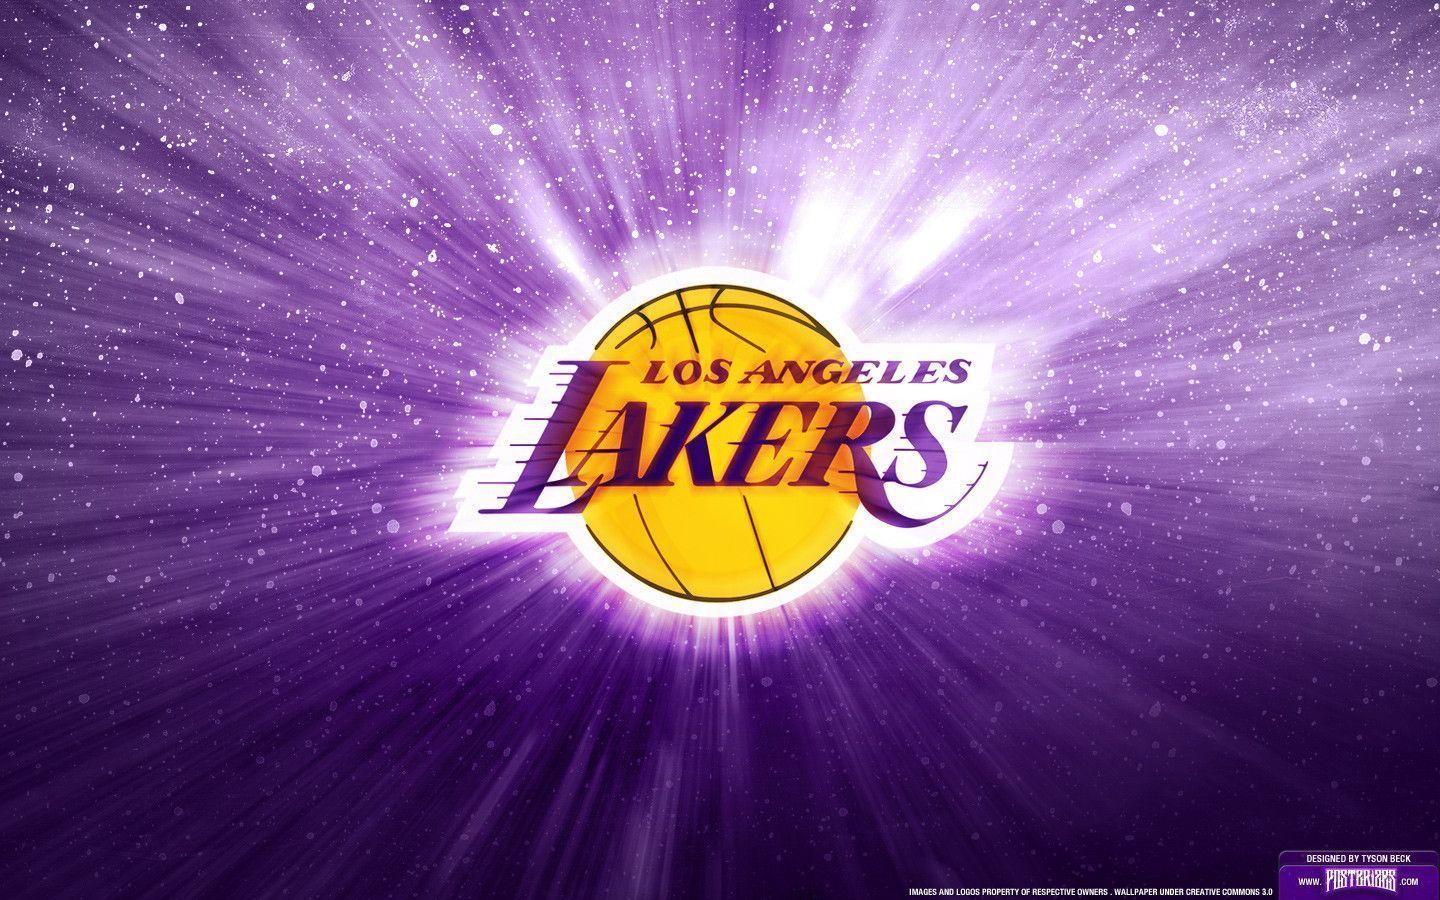 Los Angeles Lakers Logo Wallpaper. Posterizes. NBA Wallpaper